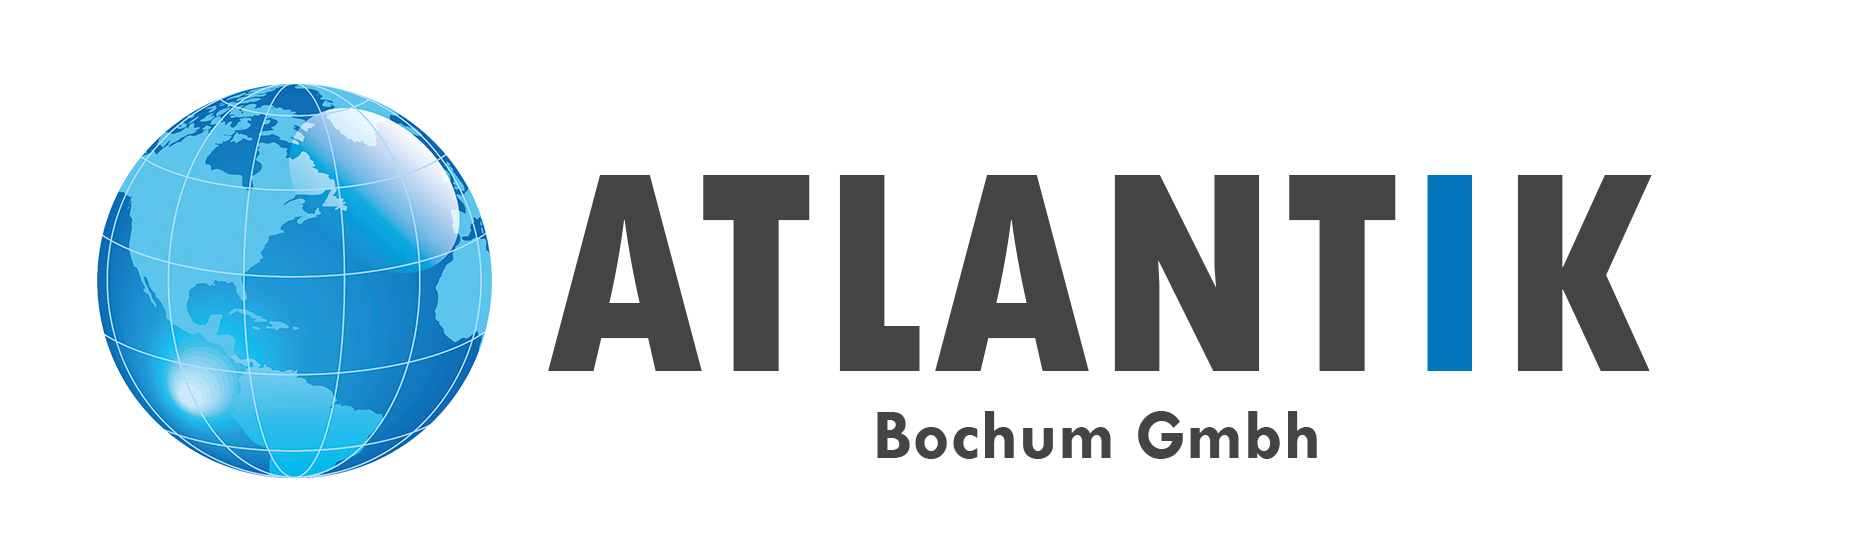 ATLANTIK Bochum GmbH 